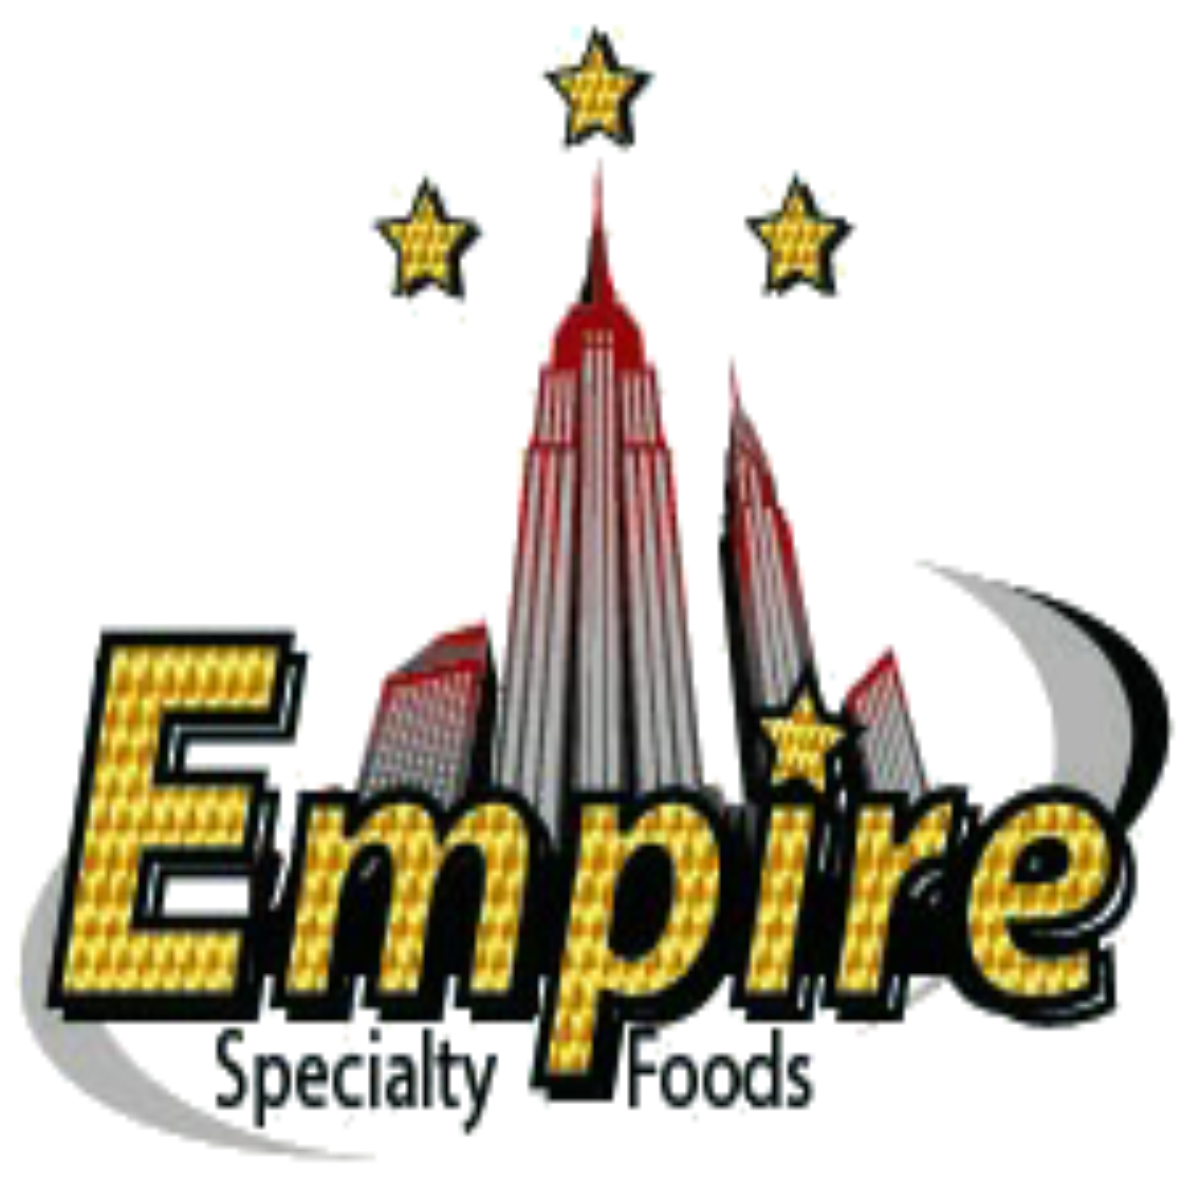 Empire Specialty Foods